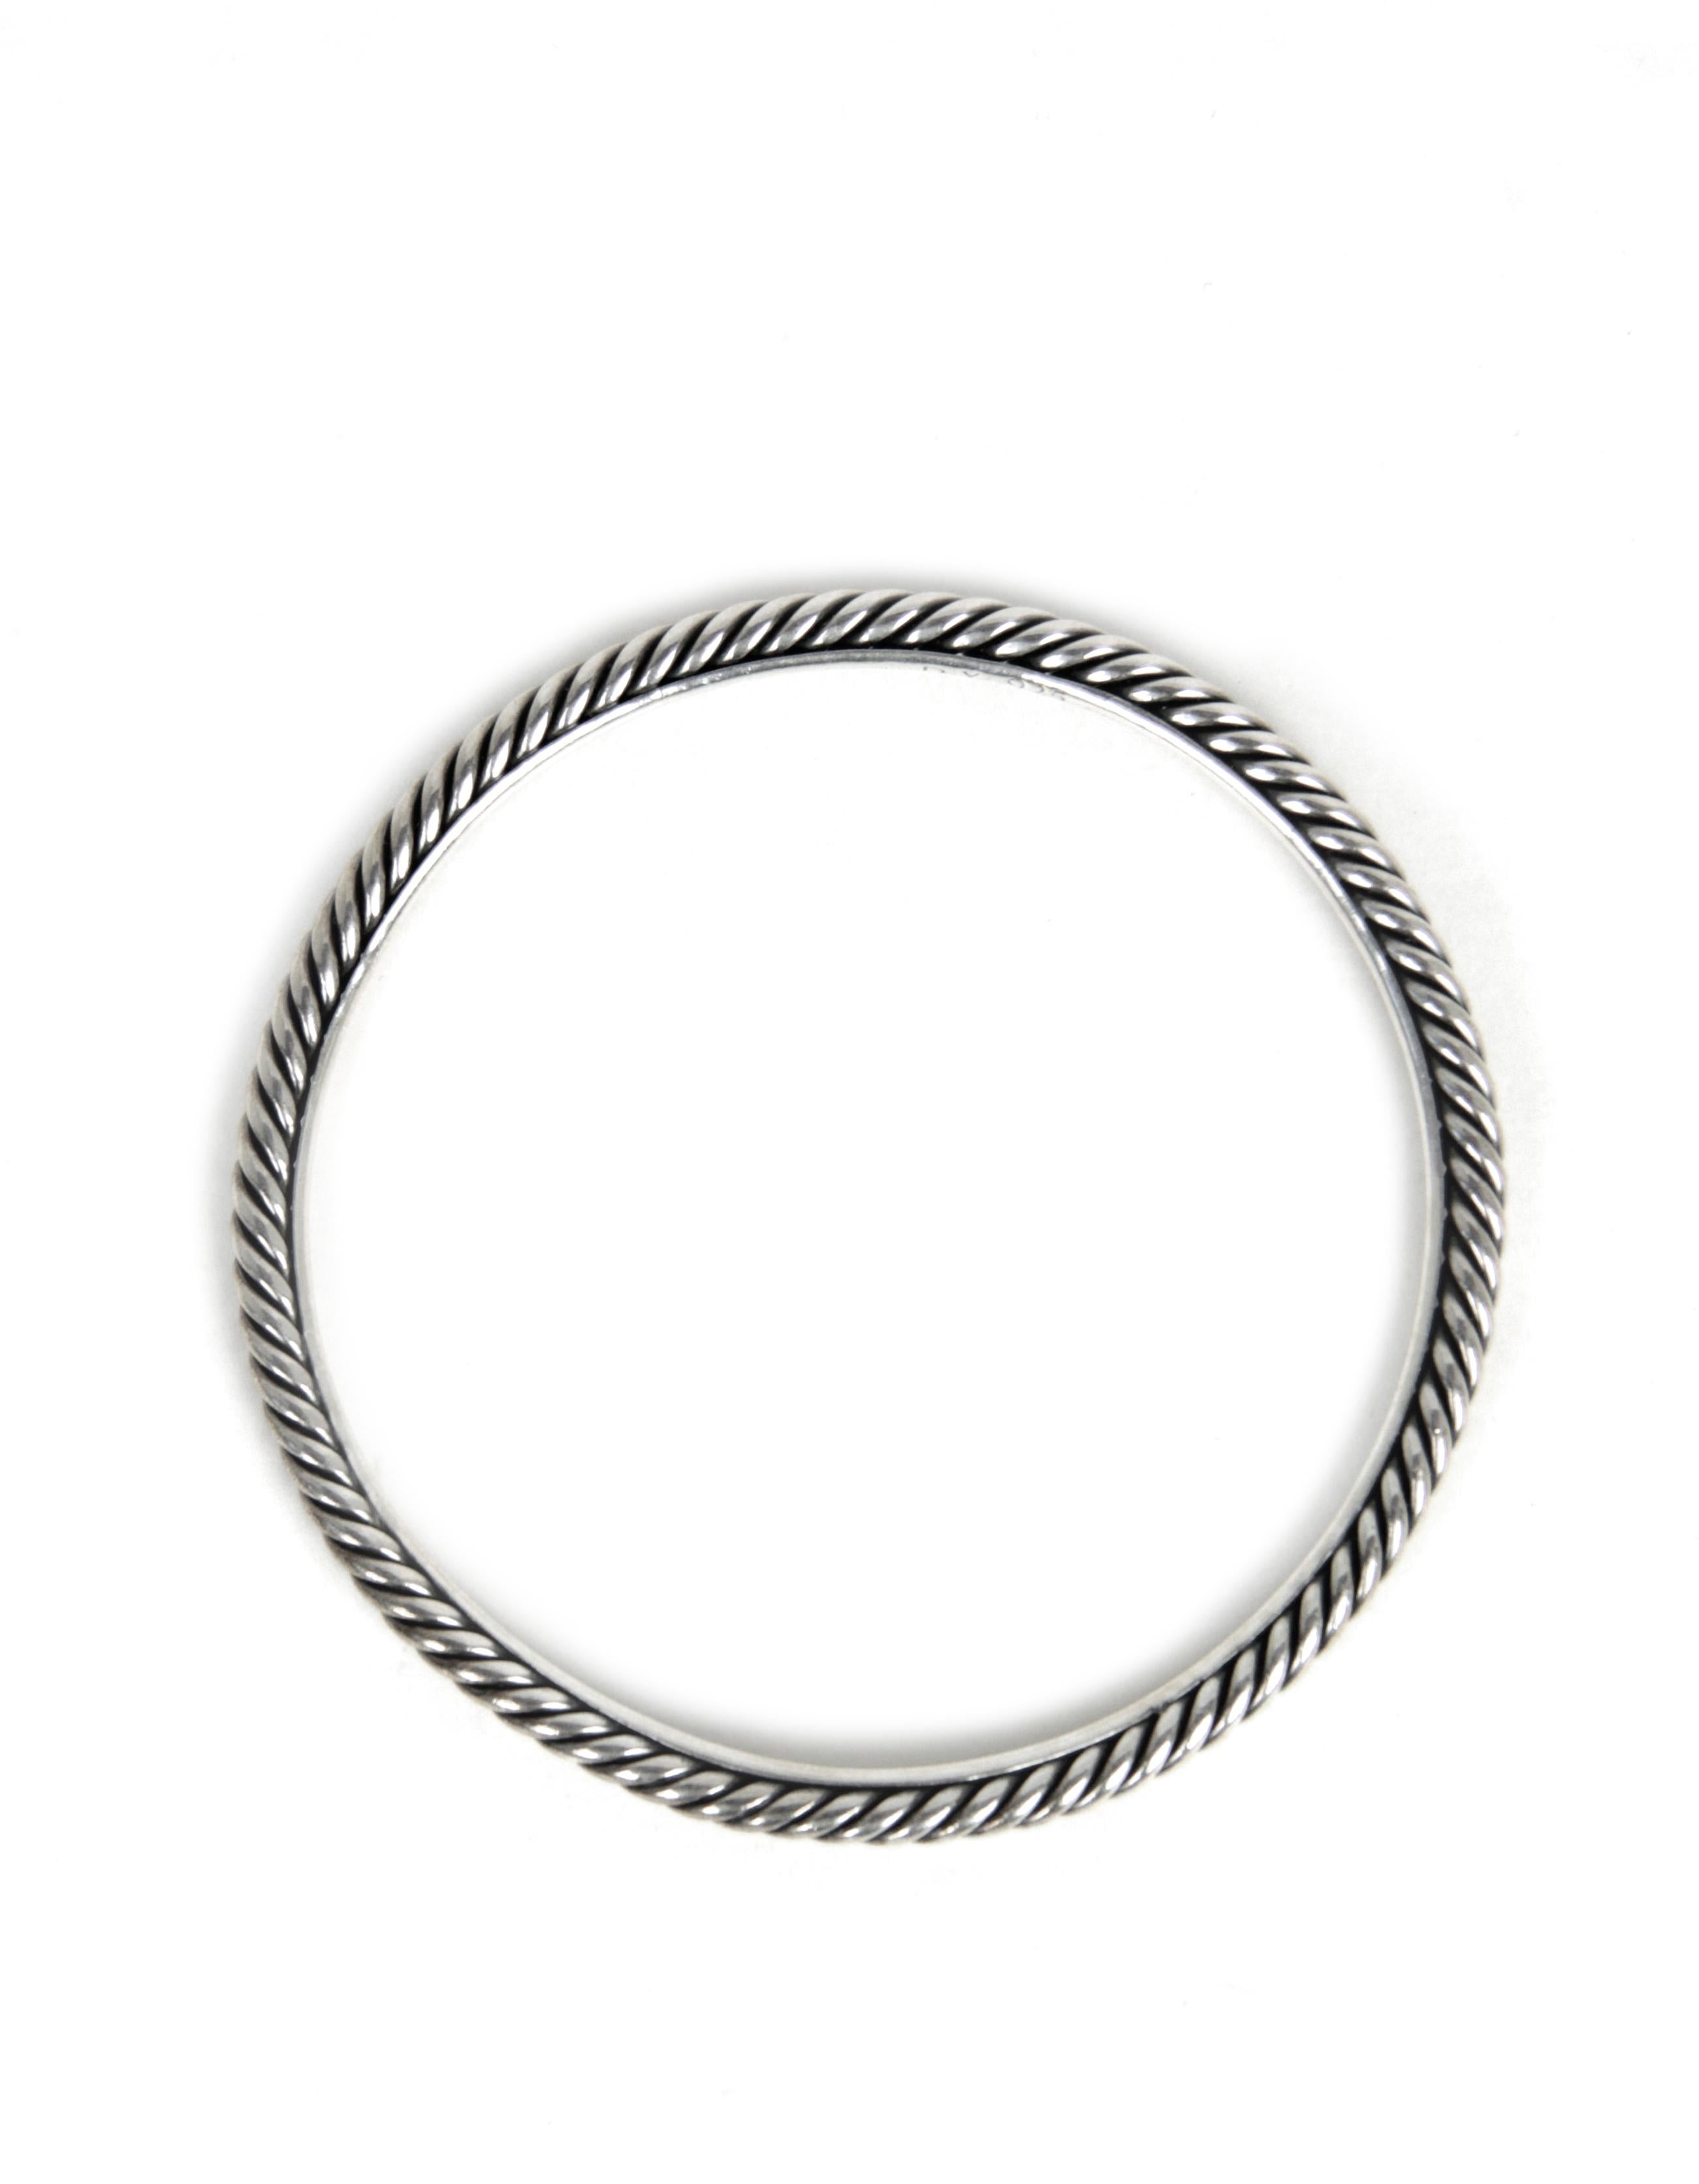 Women's David Yurman Sterling Silver 4mm Cable Bangle Bracelet sz L For Sale